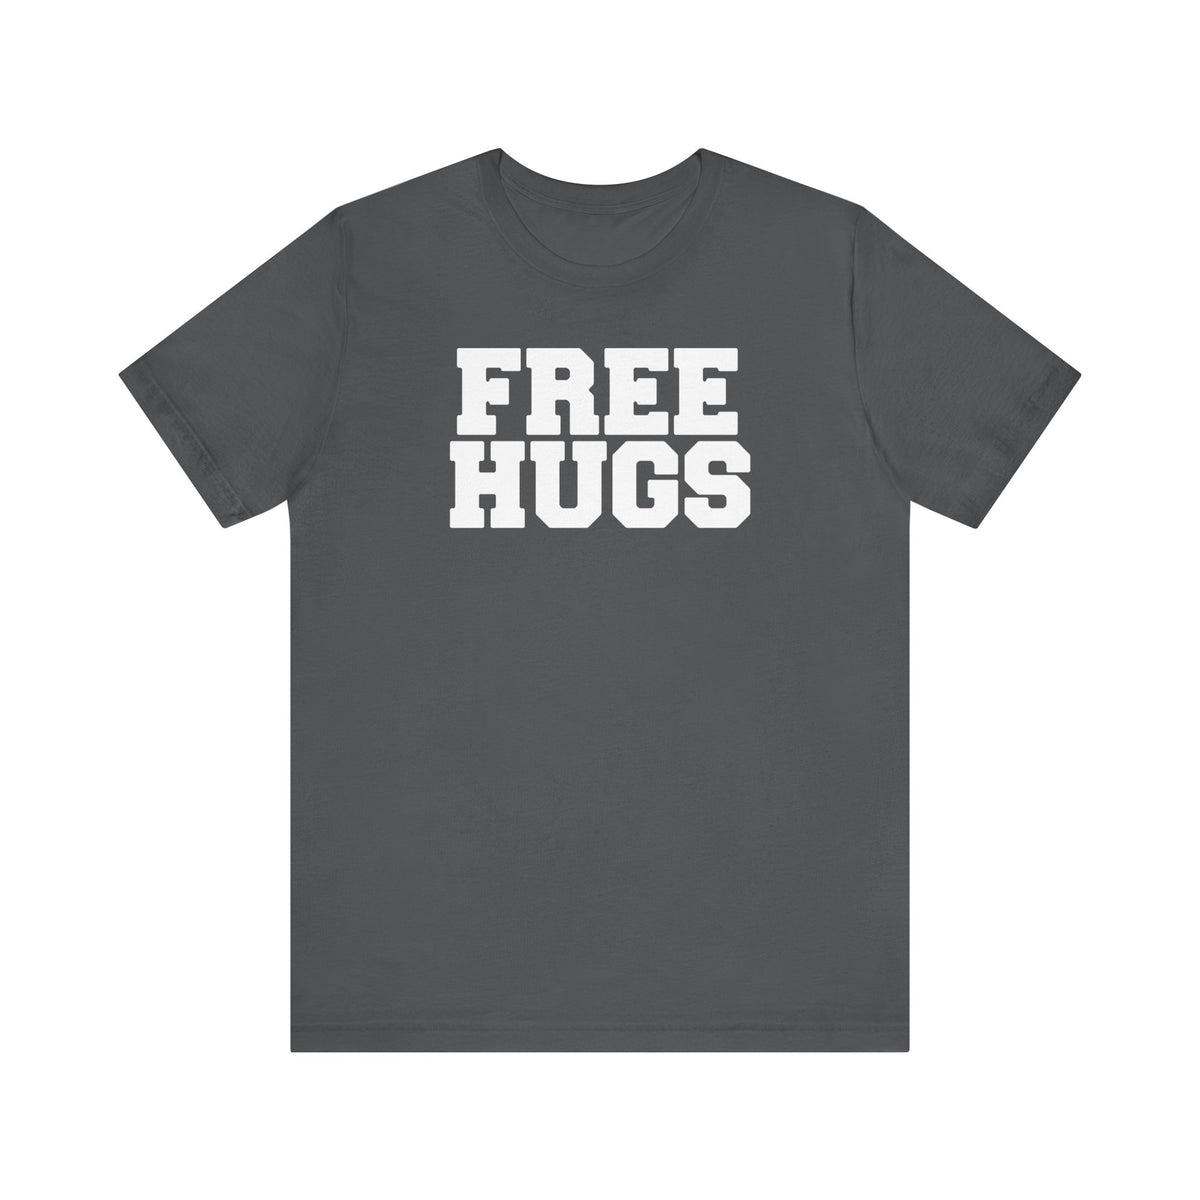 Free Hugs (World Champion Slut Hugger) - Men's T-Shirt